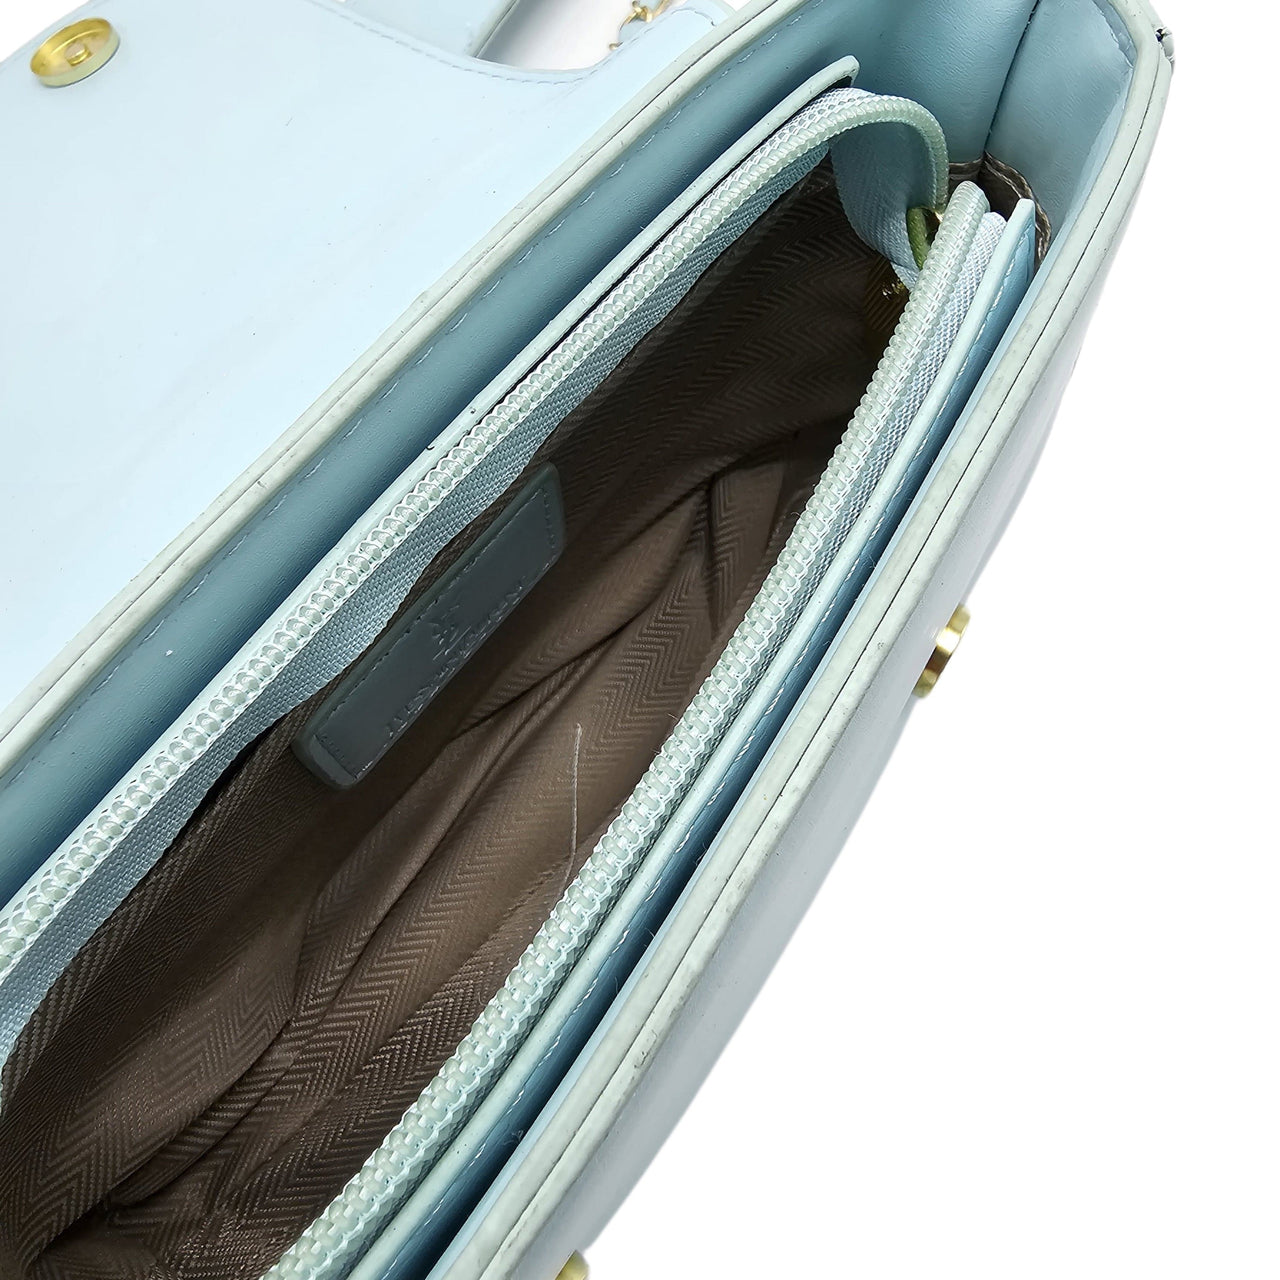 The Bag Couture Handbags, Wallets & Cases YSL Le 57 Shoulder / Crossbody Bag Powder Blue